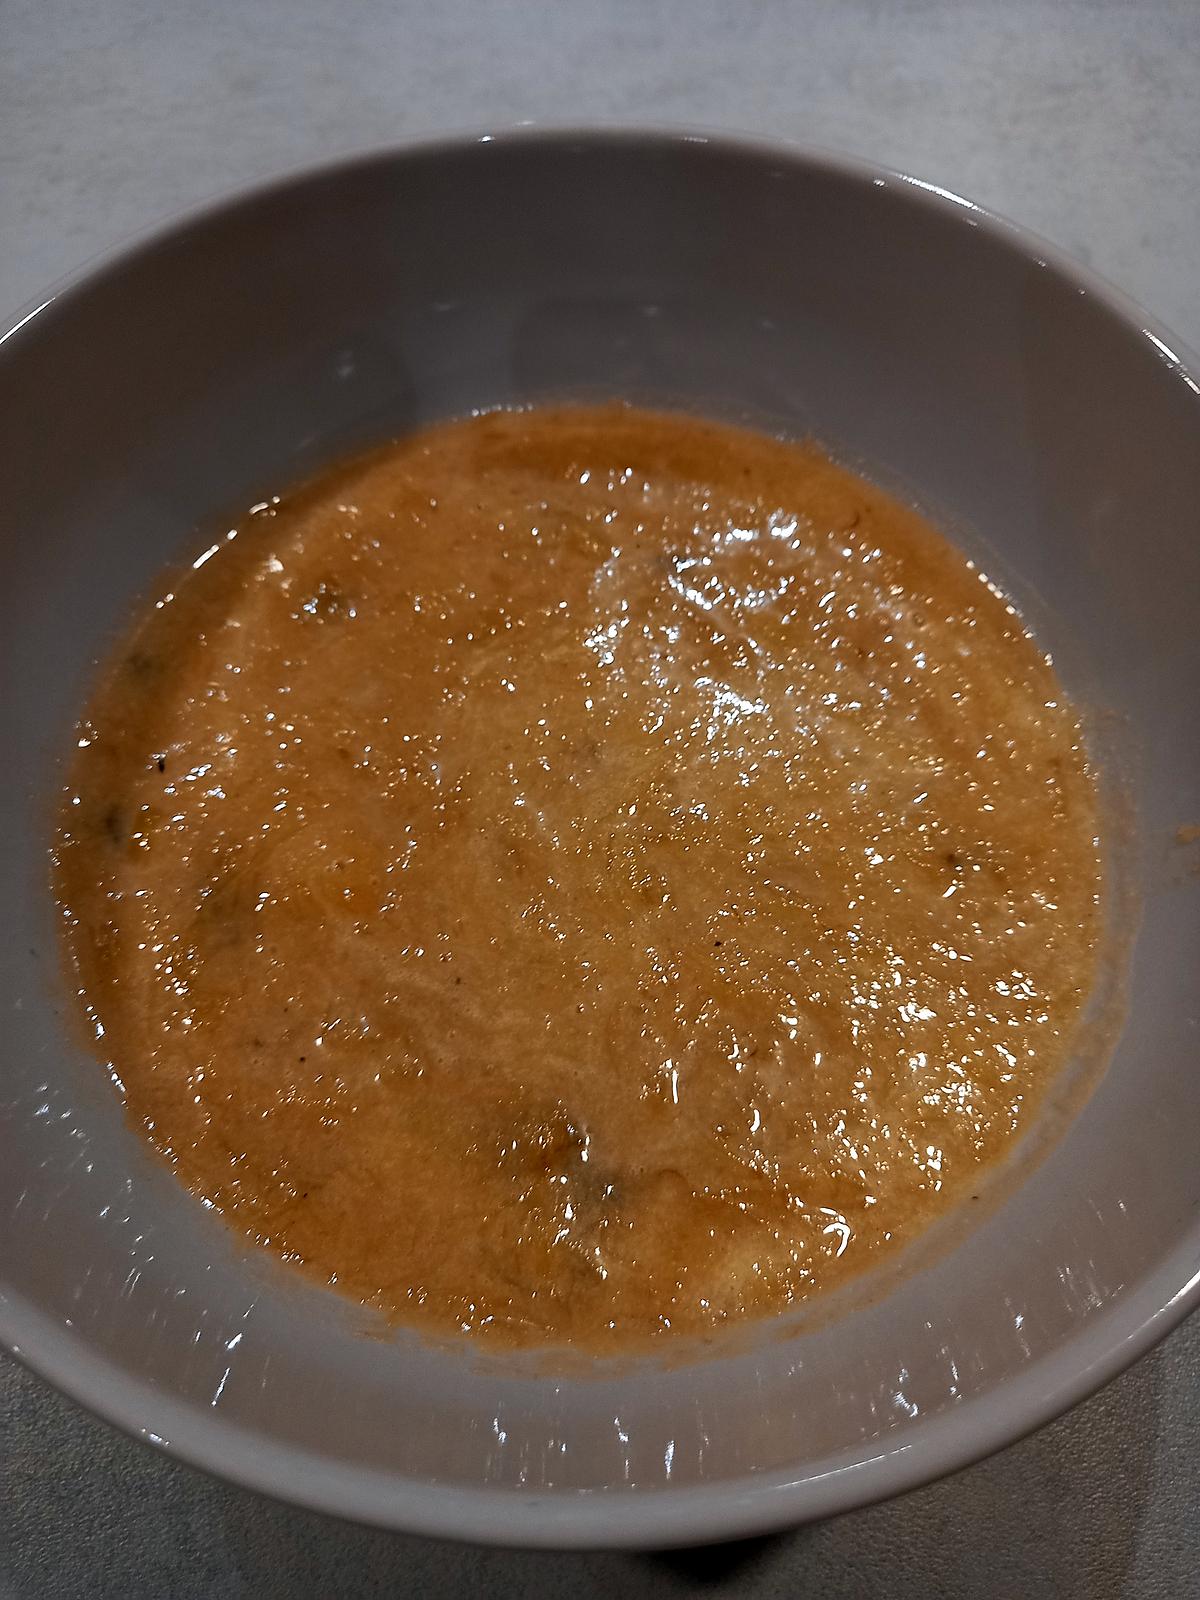 recette Compote de rhubarbe